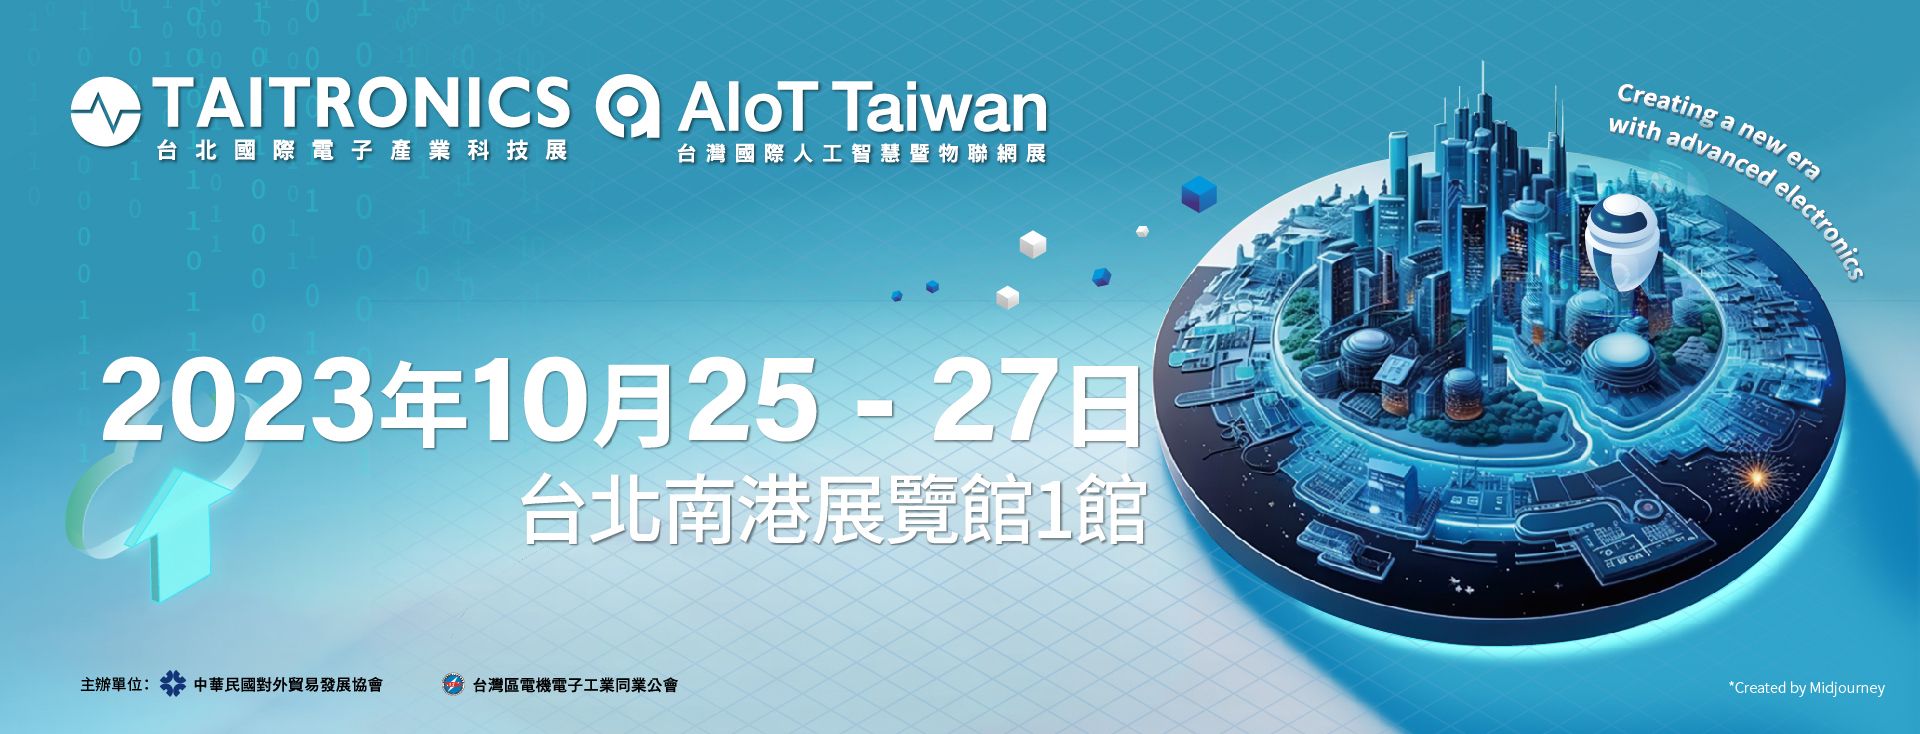 Taipei TAITRONICS 2023 - dal 25 ottobre al 27 ottobre 2023